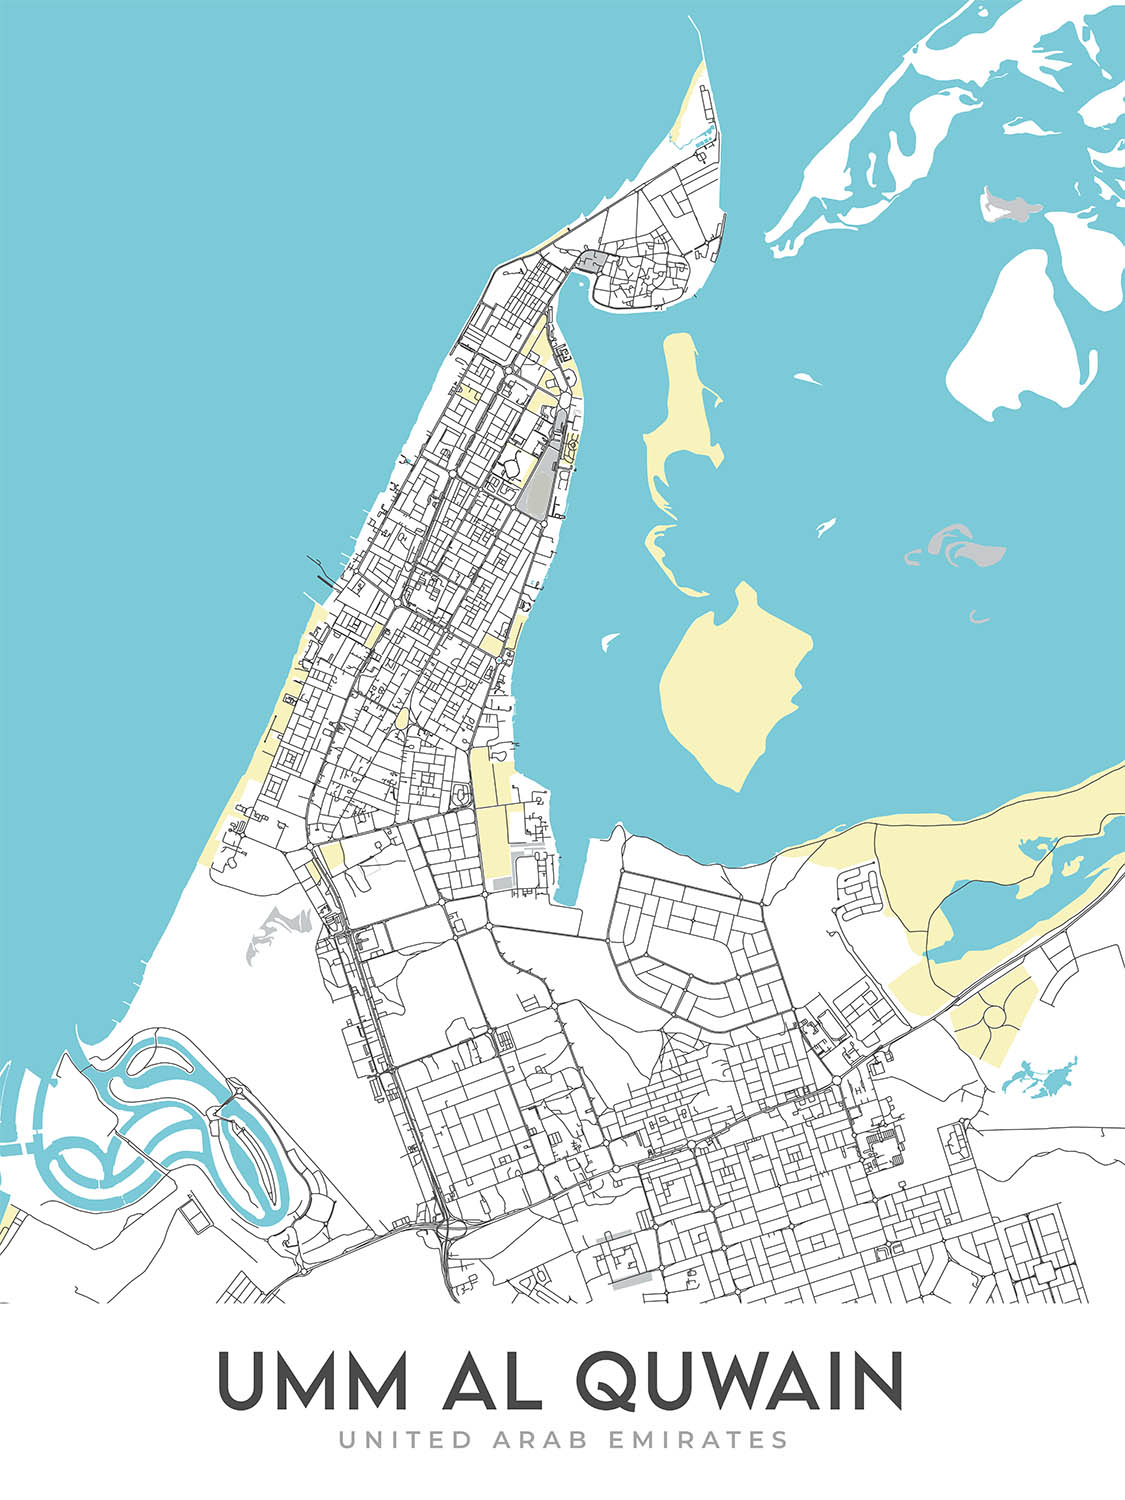 Modern City Map of Umm Al Quwain, UAE: Fort, Museum, Corniche, Sheikh Mohammed Bin Zayed Road, Emirates Road